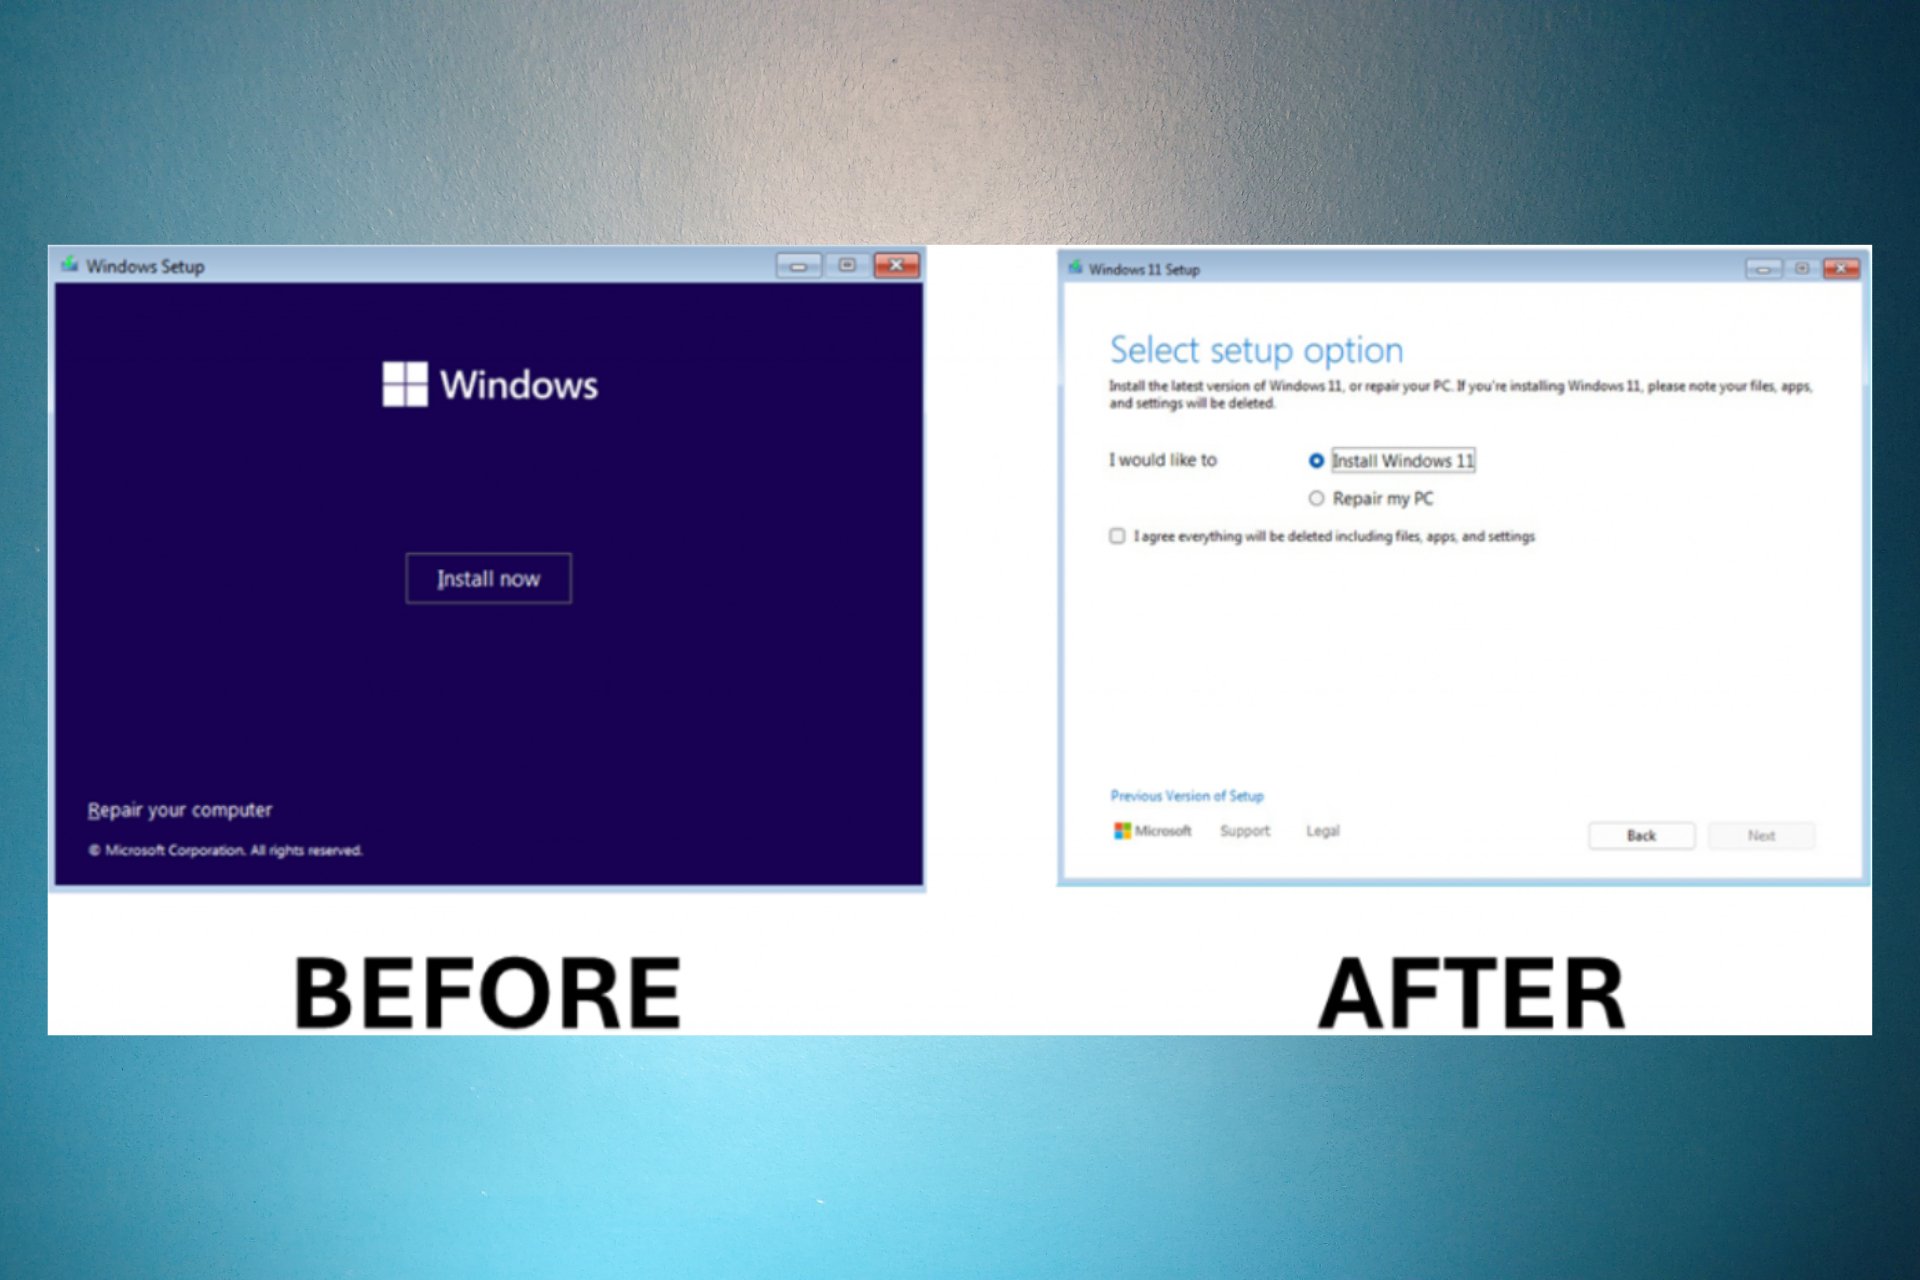 Microsoft changes the Windows Setup Experience